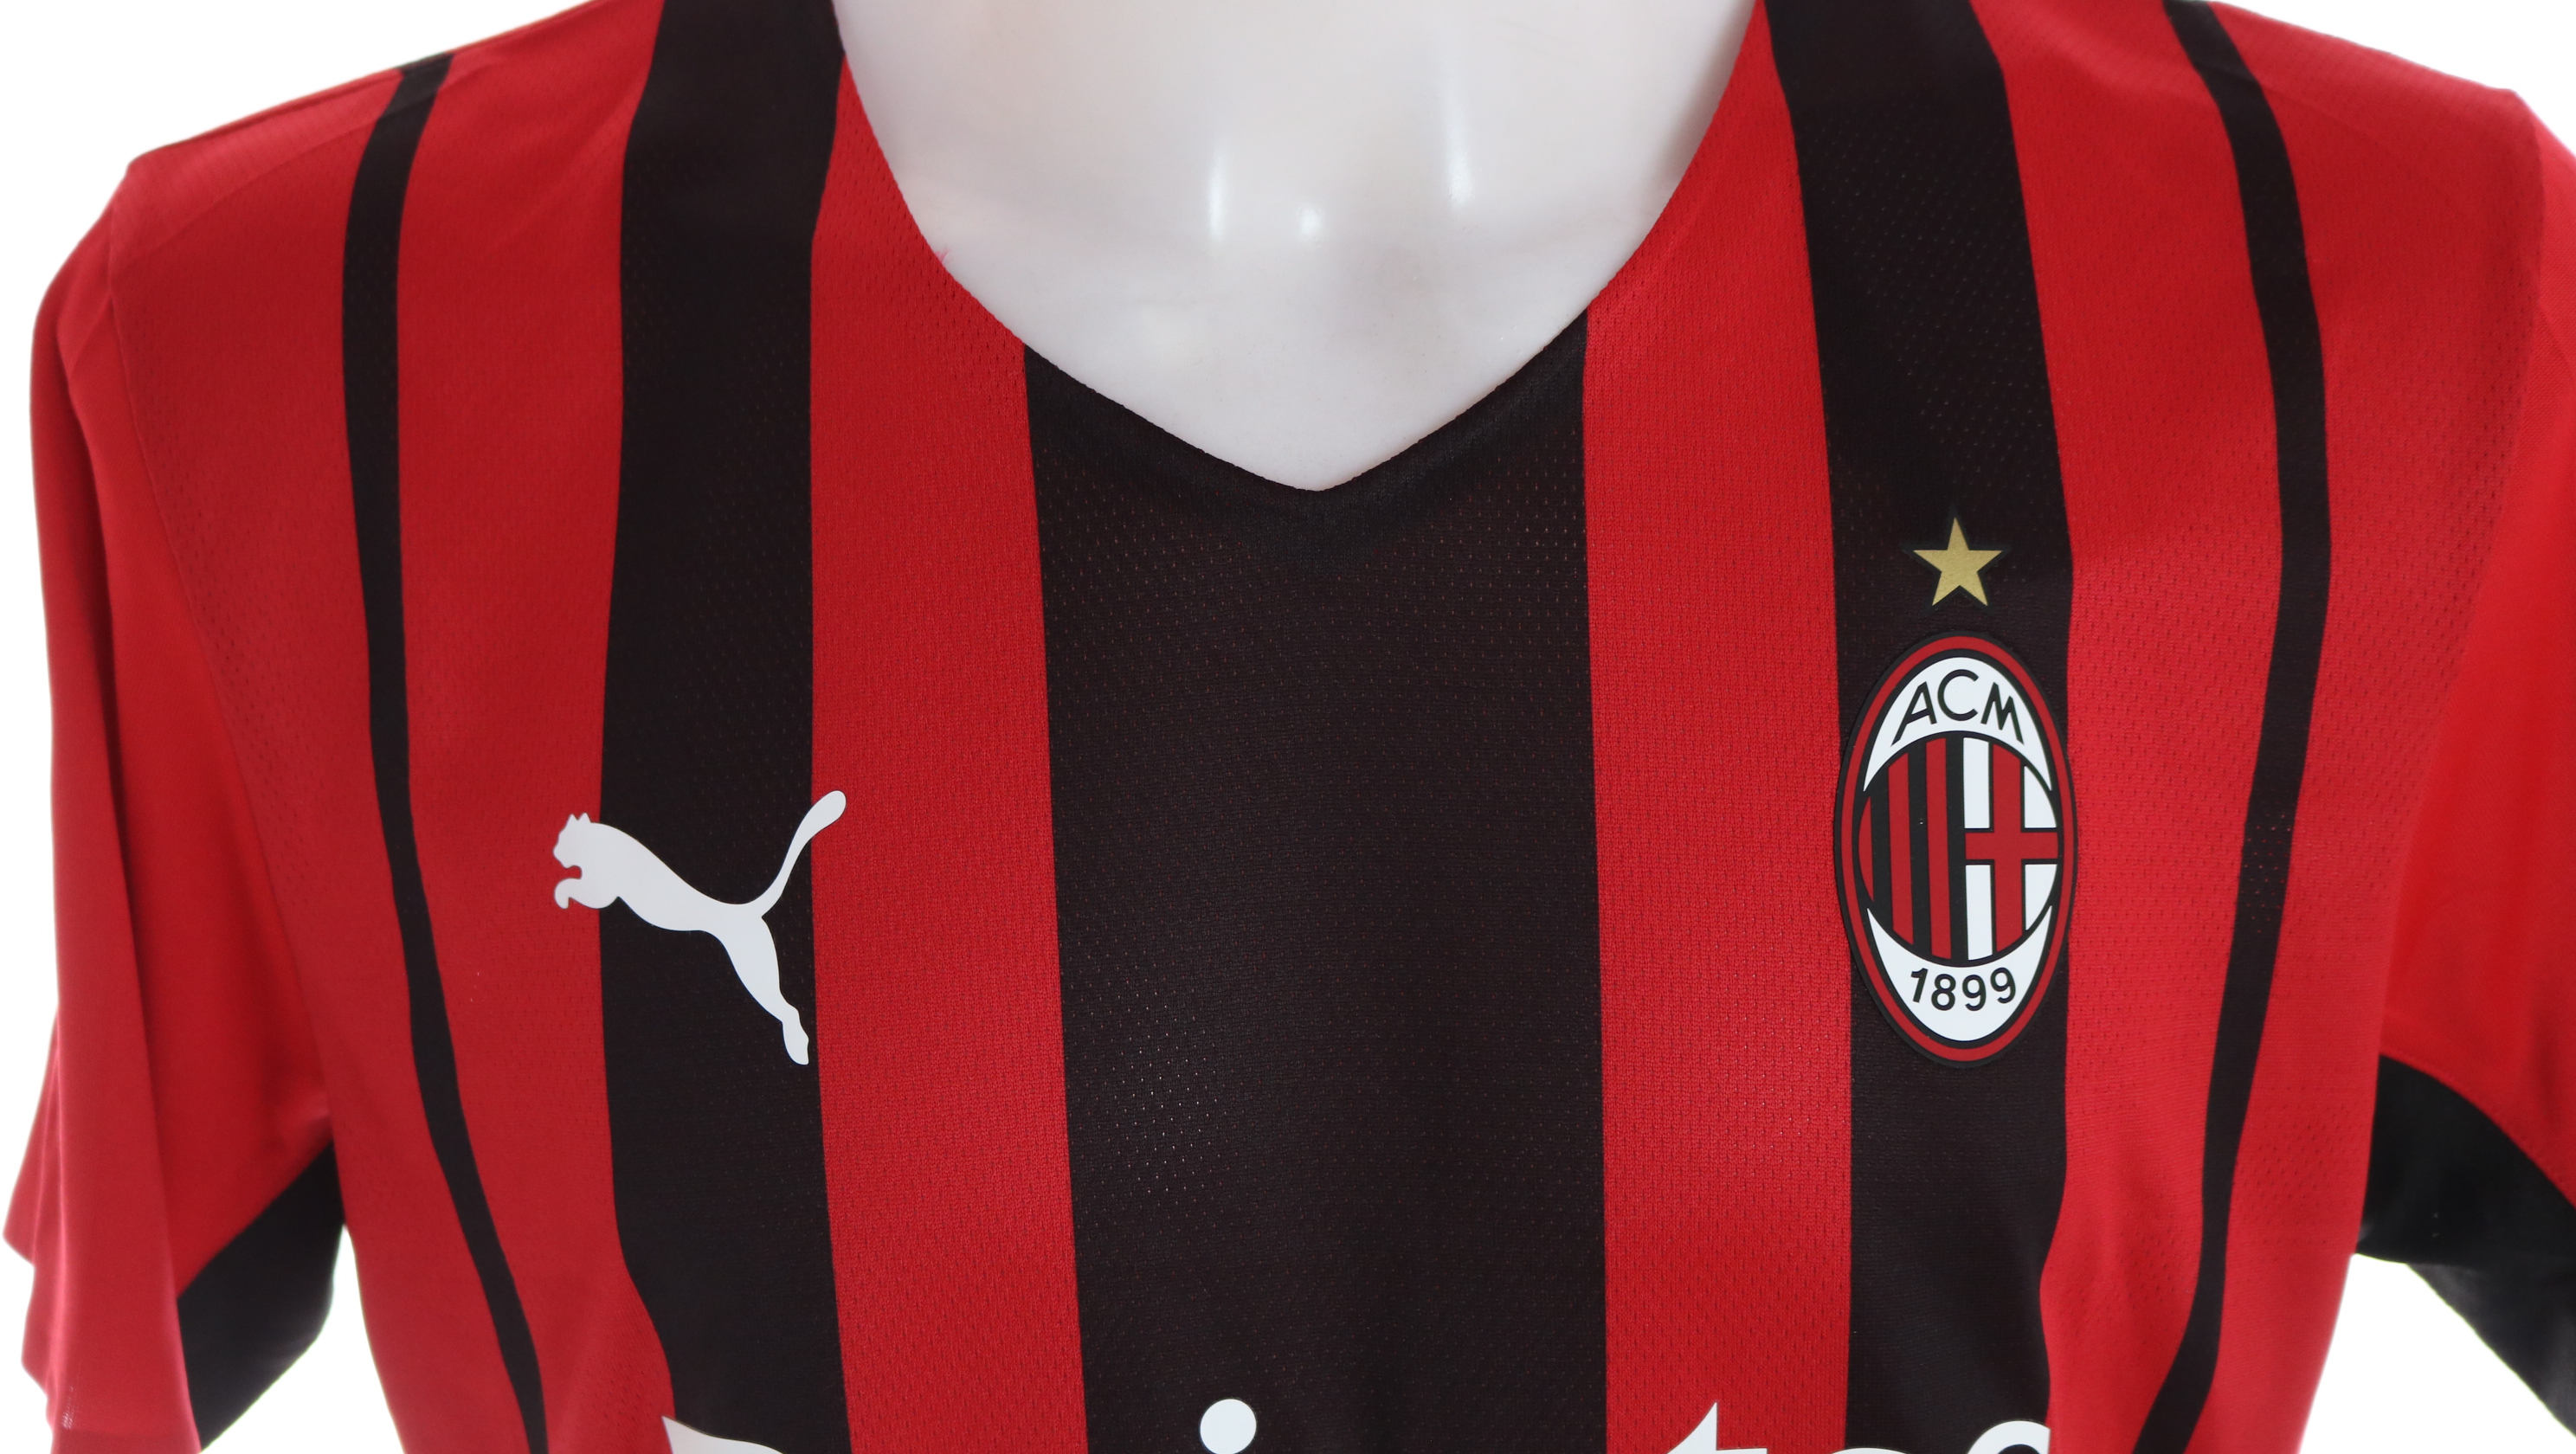 Harmont & Blaine Dachshund Toy + Signed AC Milan Shirt by Rafael Leao -  CharityStars